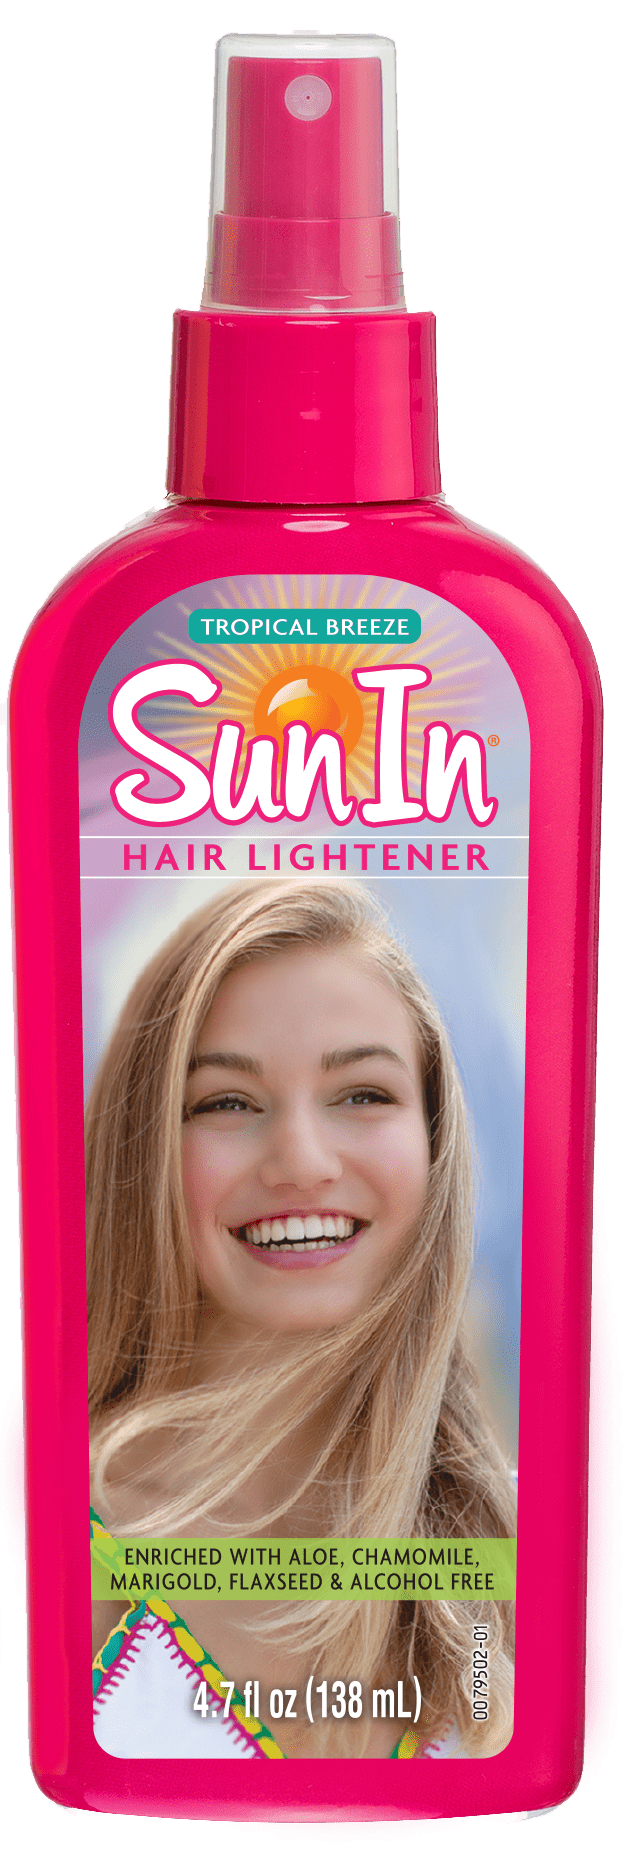 Sun In Hair Lightener, Tropical Breeze, Alcohol-Free,  oz 